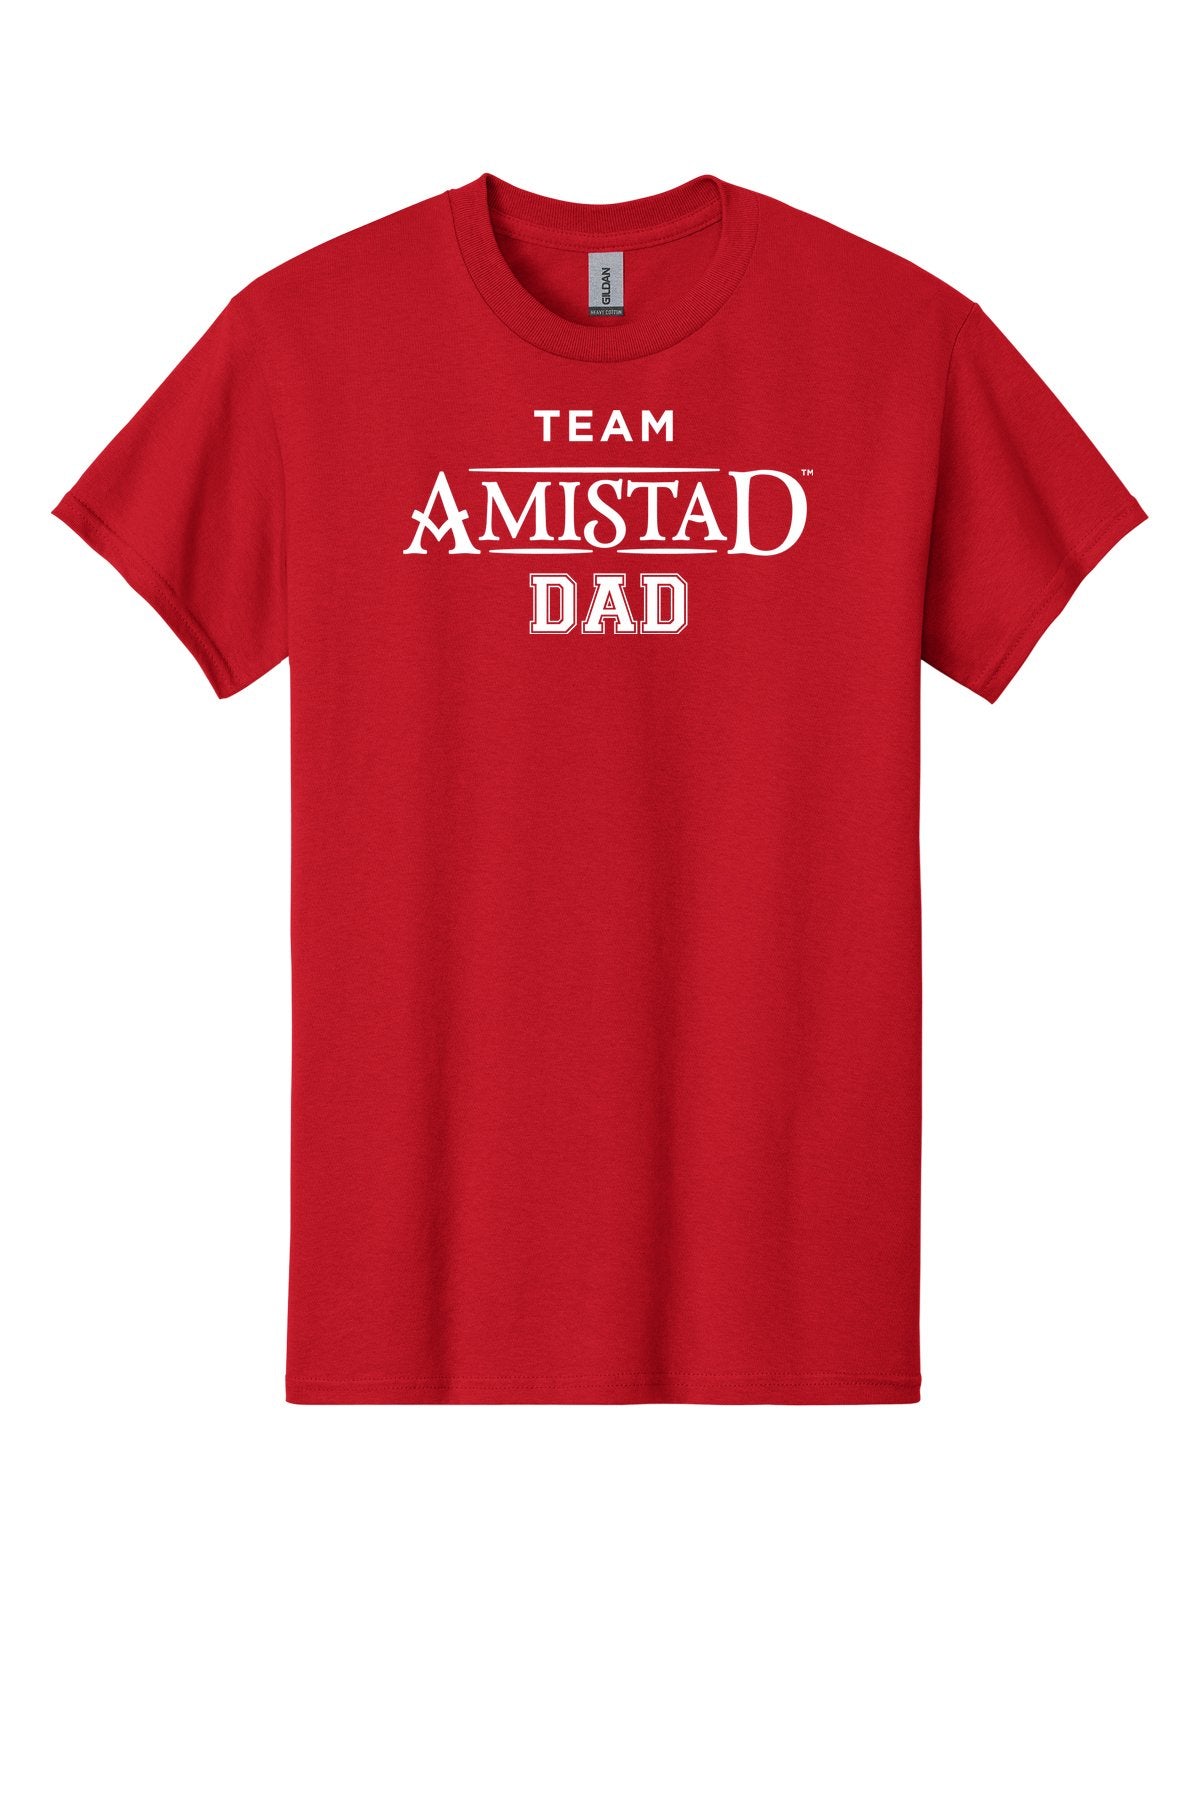 Adult T-Shirt Team Amistad Dad - DFW Impression